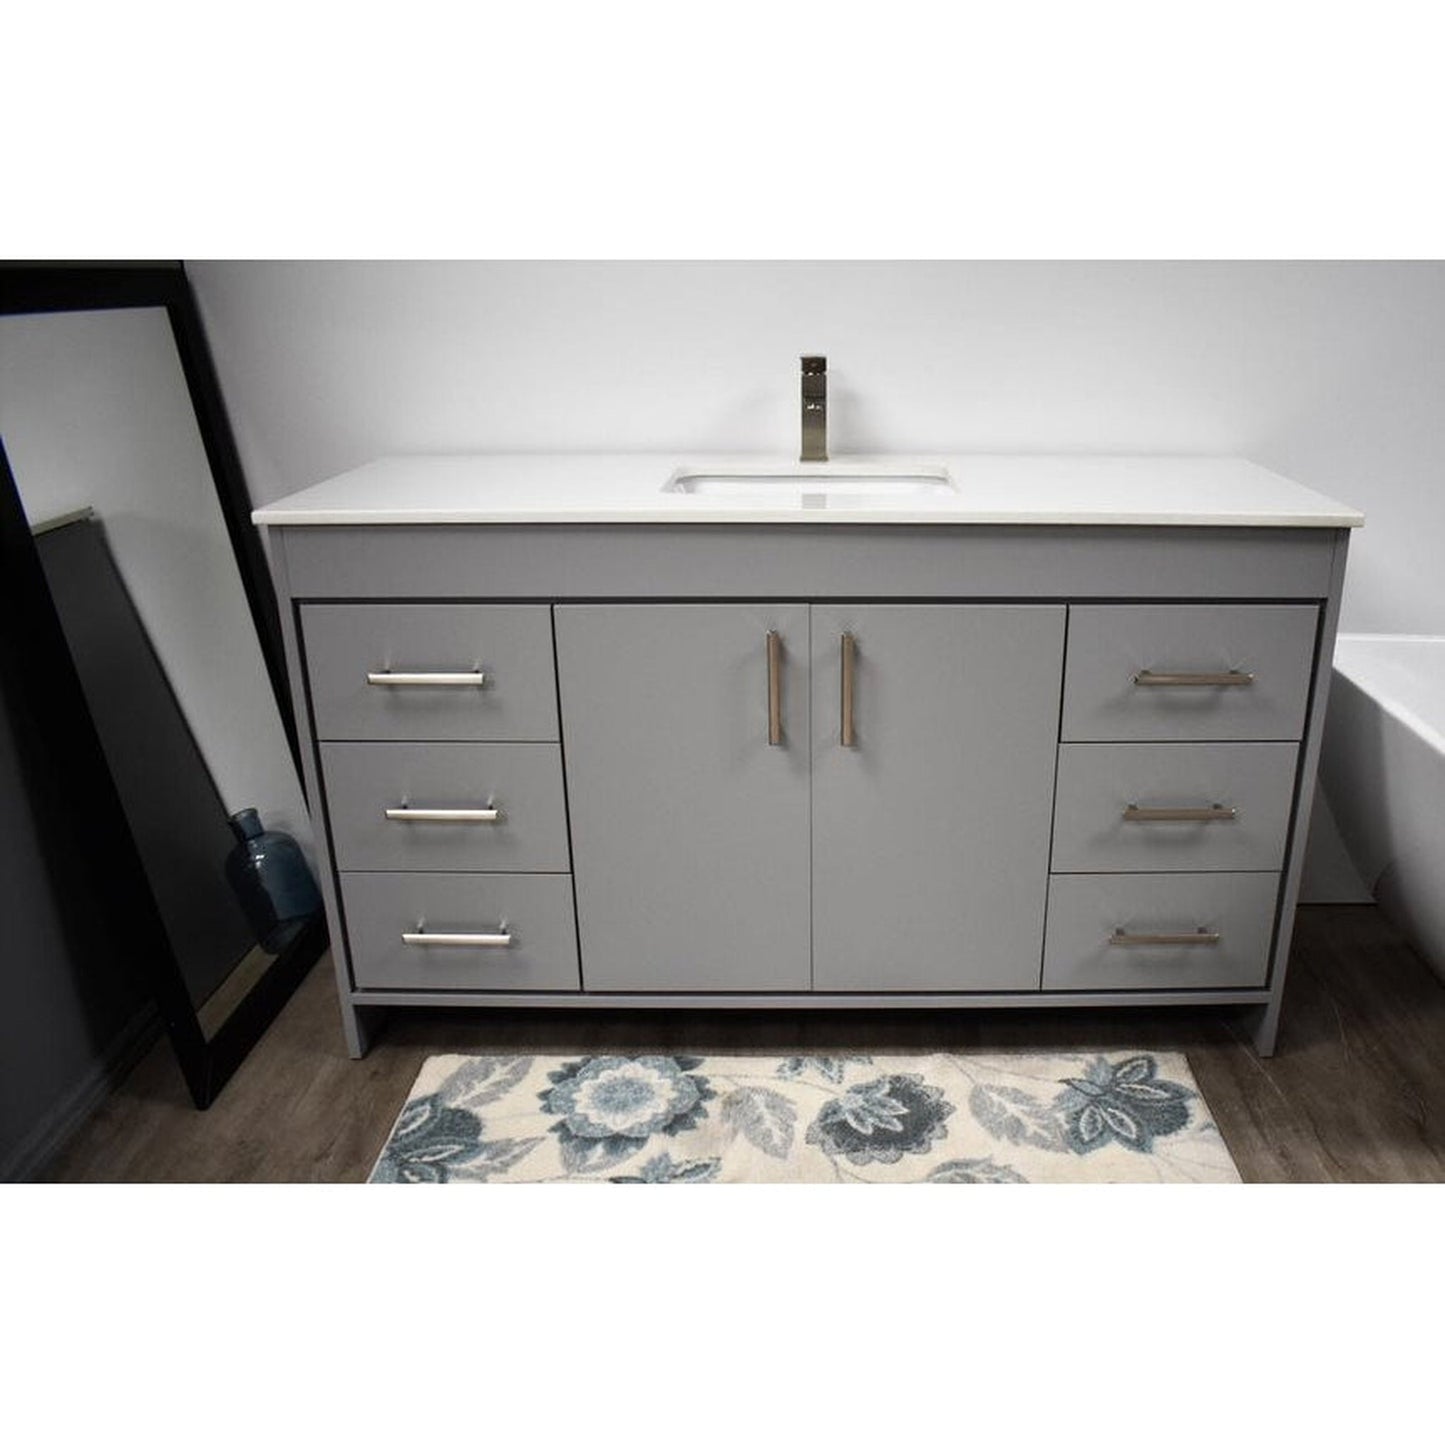 Volpa USA Capri 60" x 22" Gray Freestanding Modern Bathroom Vanity With Undermount Single Sink And White Microstone Top With Brushed Nickel Edge Handles